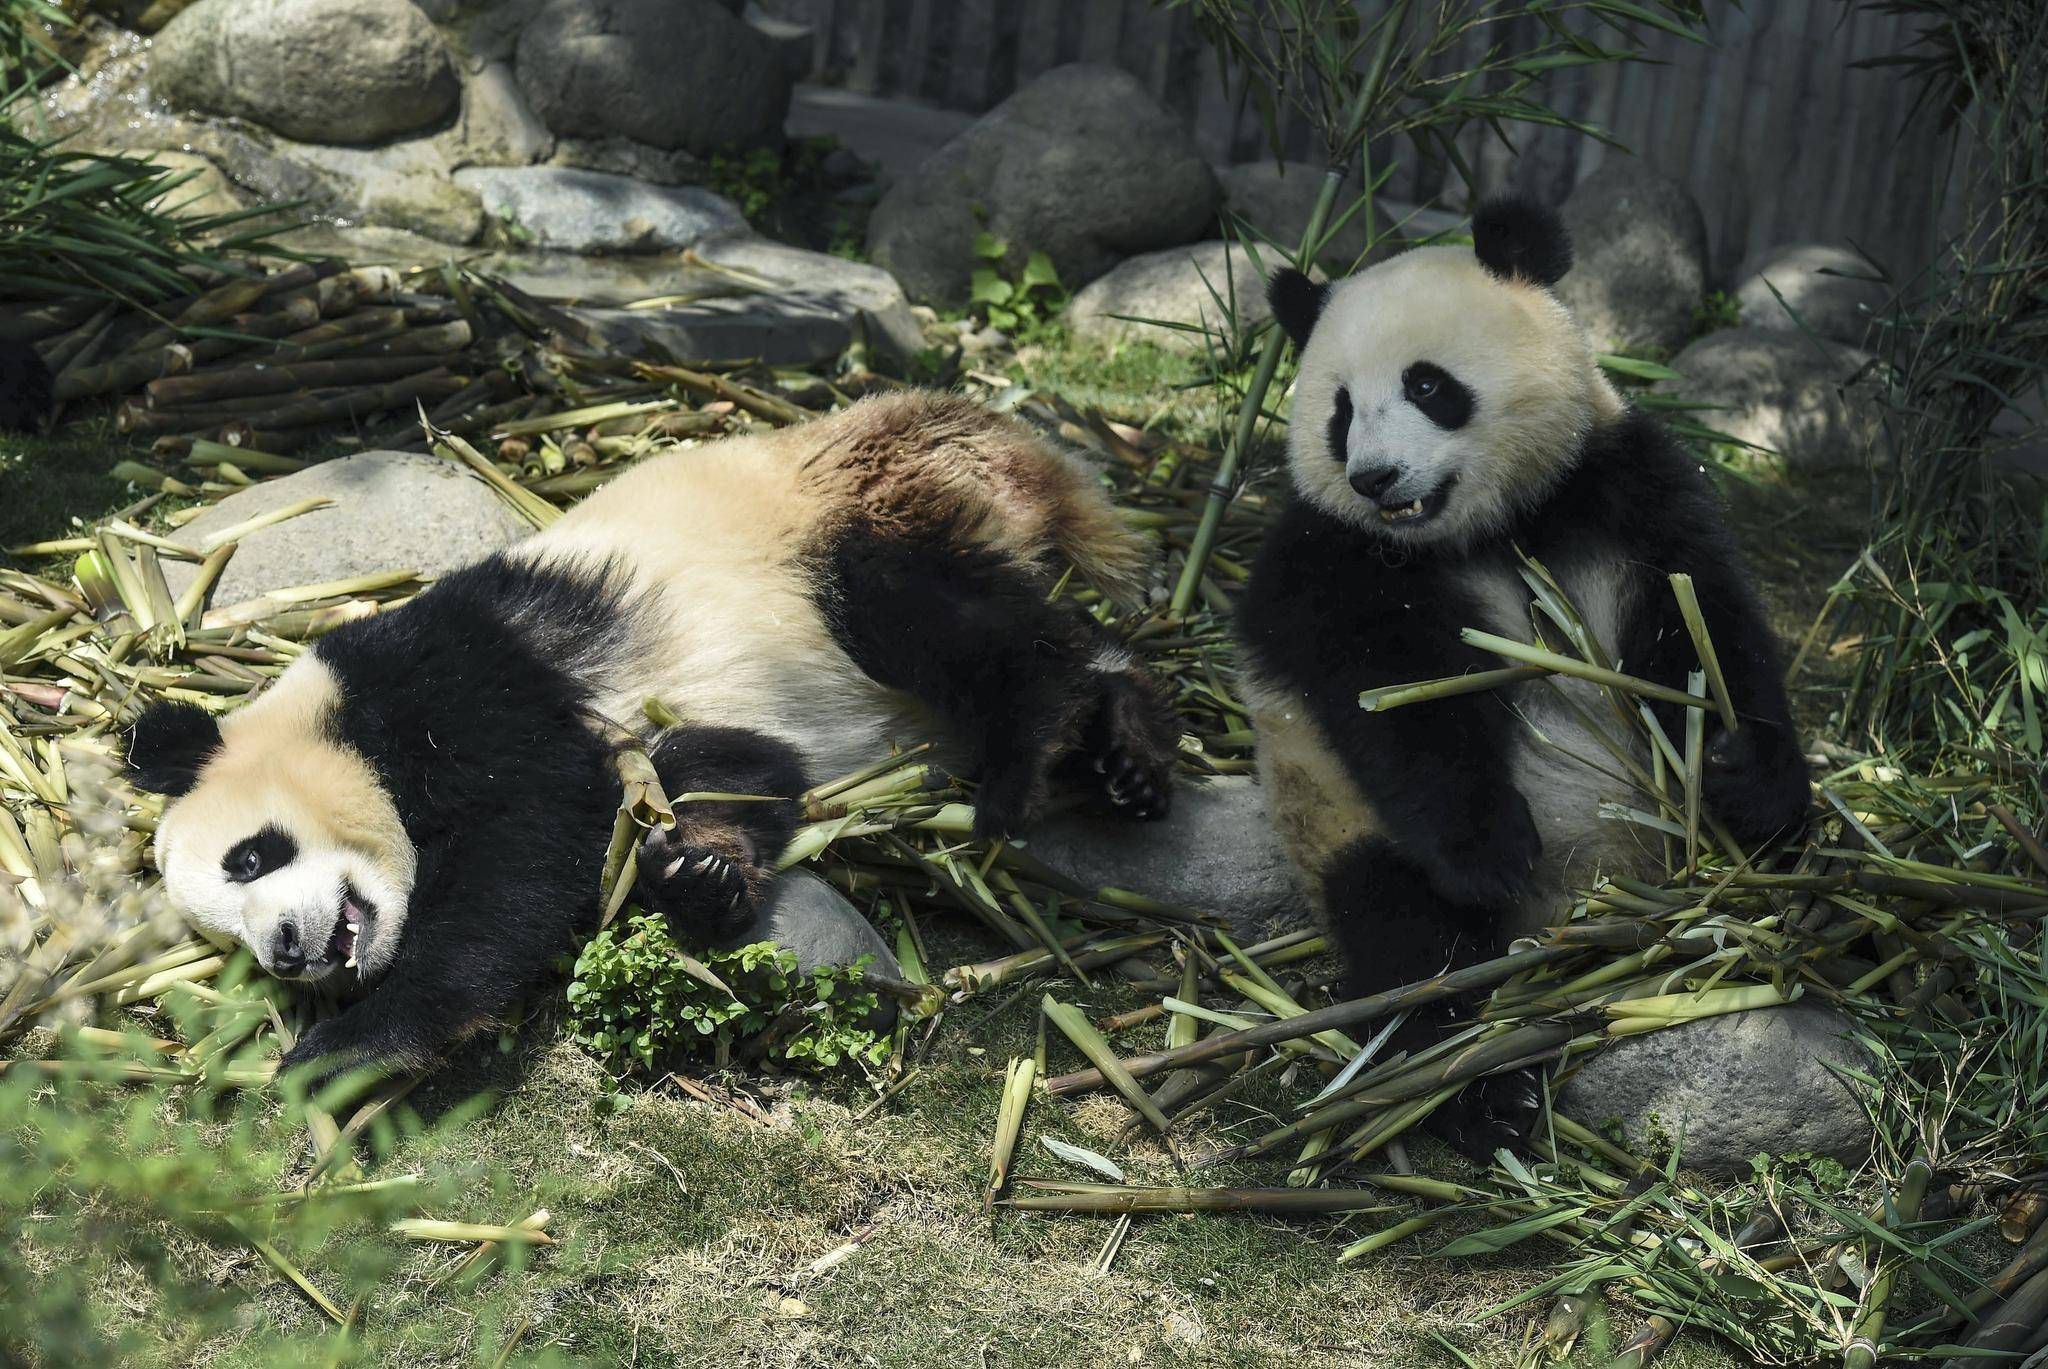 Endangered Female Giant Panda Killed - 10 Poachers Arrested